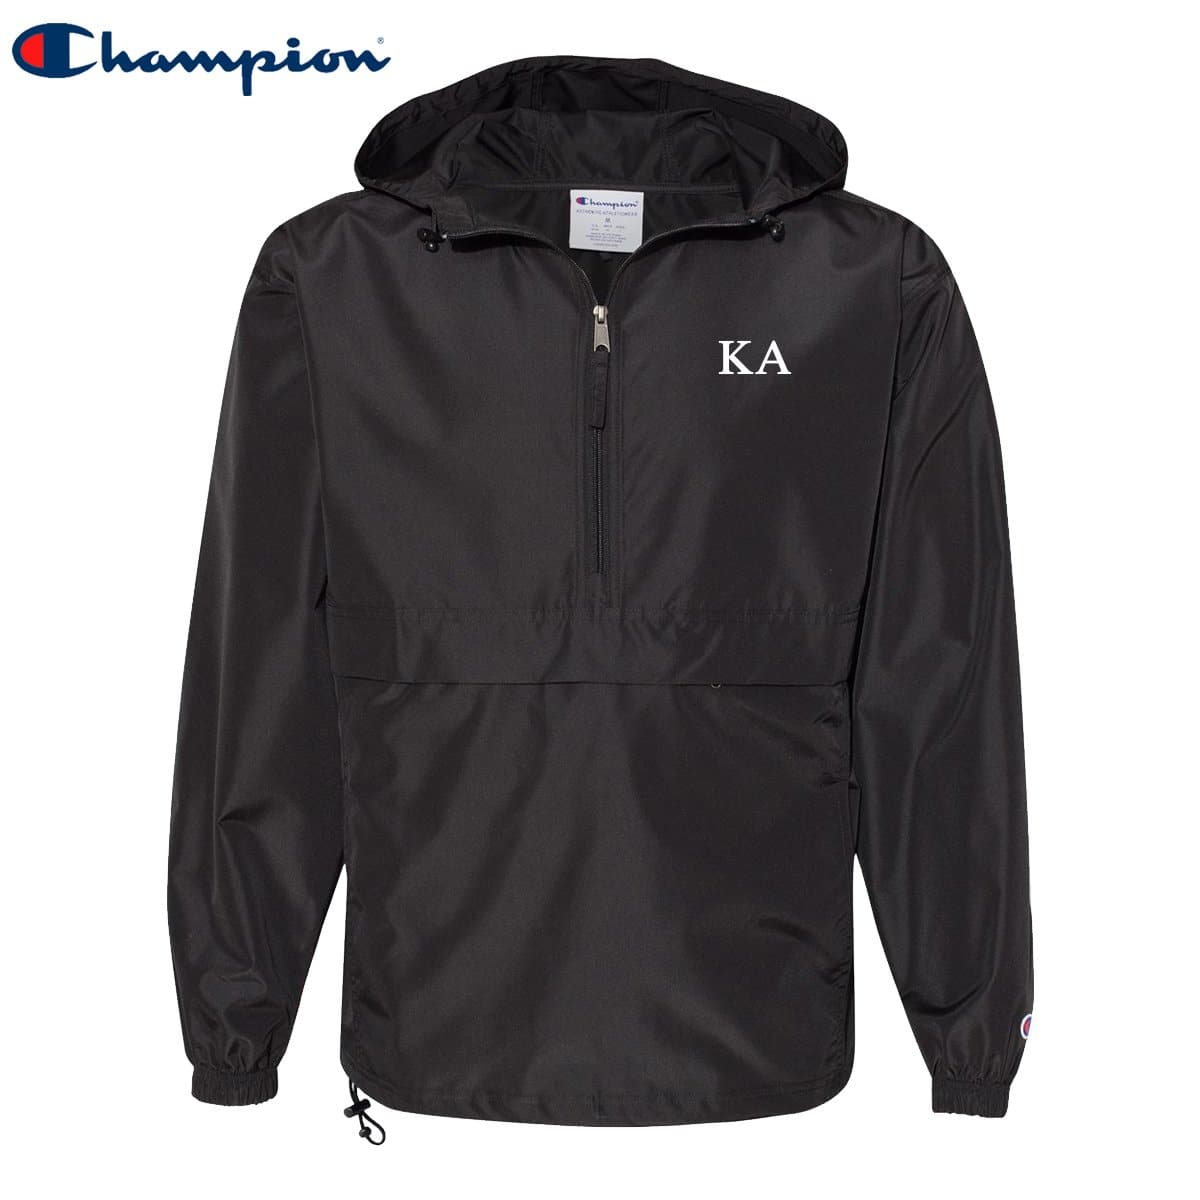 Kappa Alpha Champion Lightweight Windbreaker | Kappa Alpha Order | Outerwear > Jackets